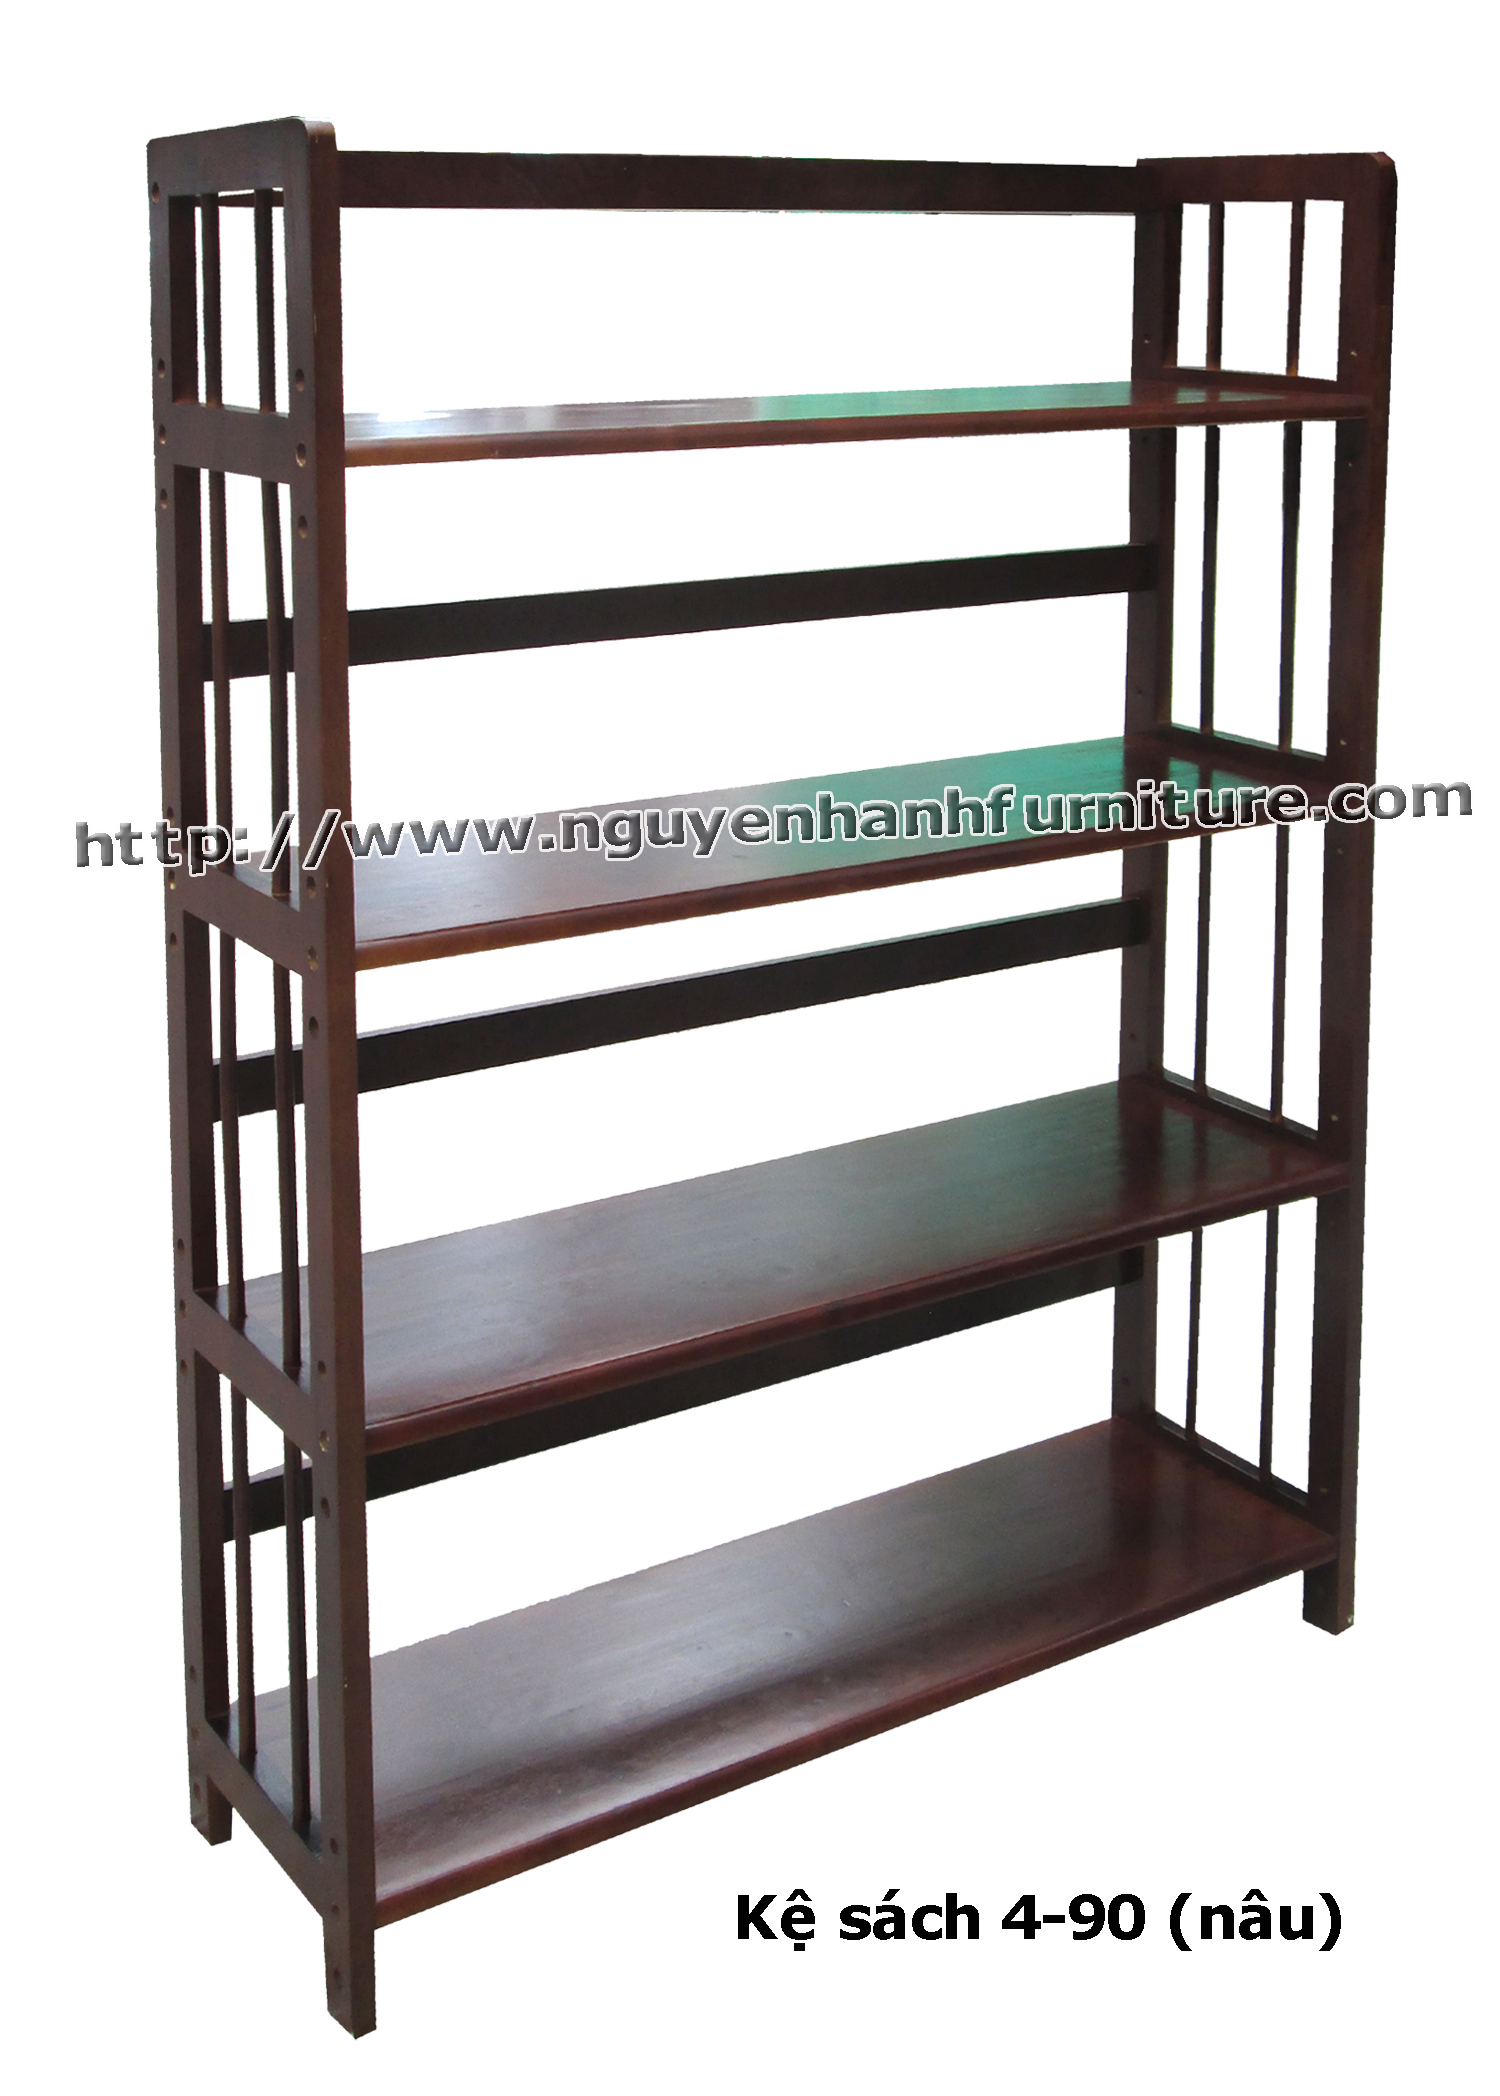 Name product: 4 storey Adjustable Bookshelf 90 (Brown) - Dimensions: 80 x 28 x 120 (H) - Description: Wood natural rubber